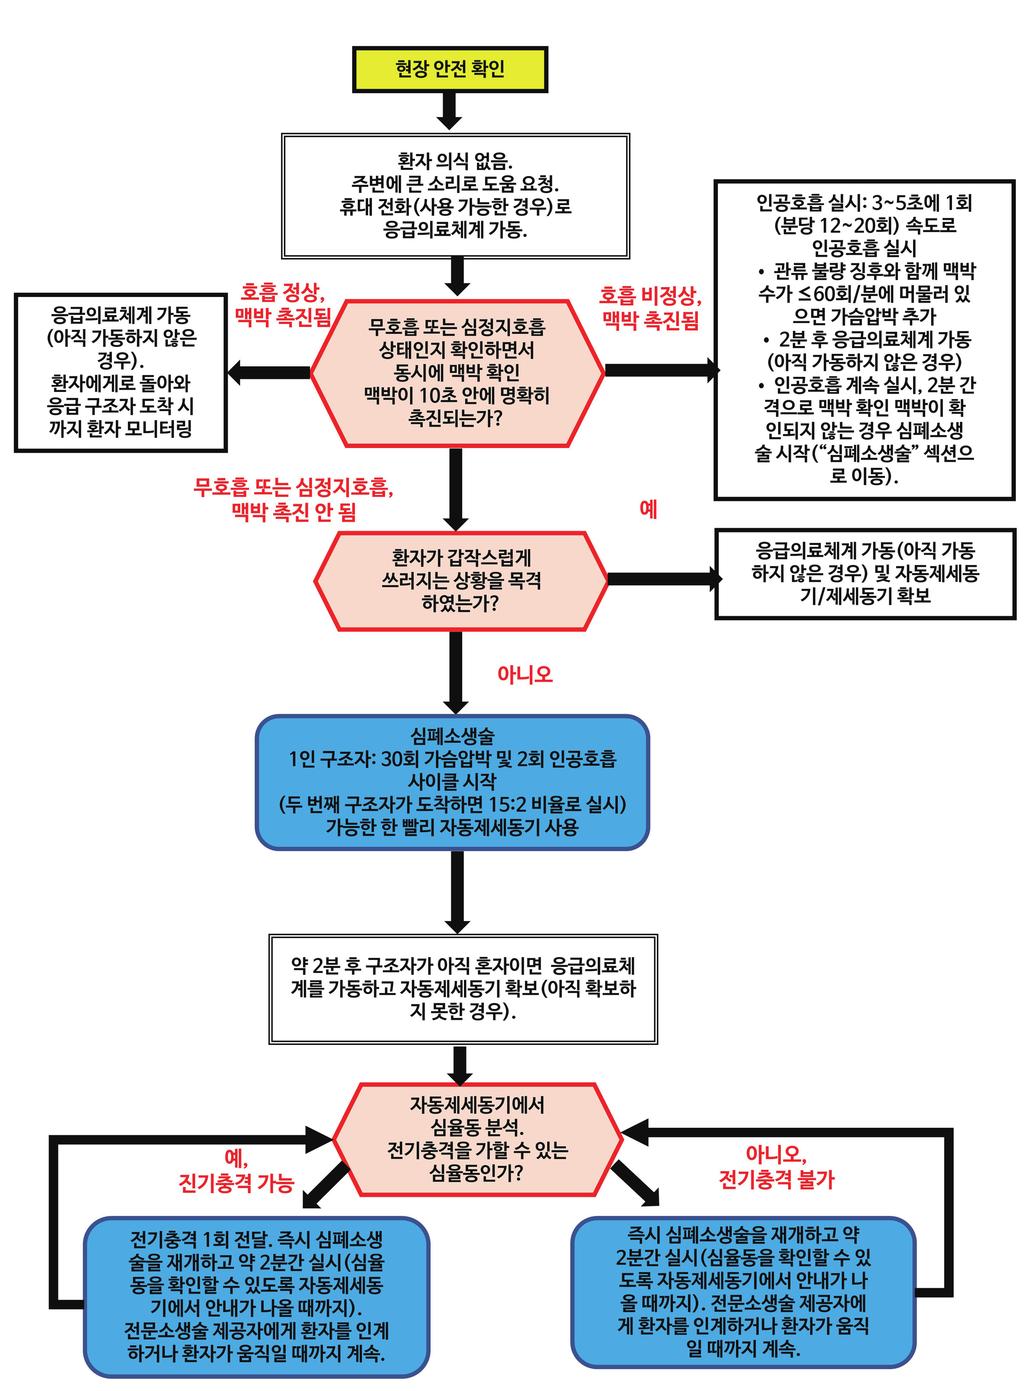 J Korean Acad Pediatr Dent 44(2) 20